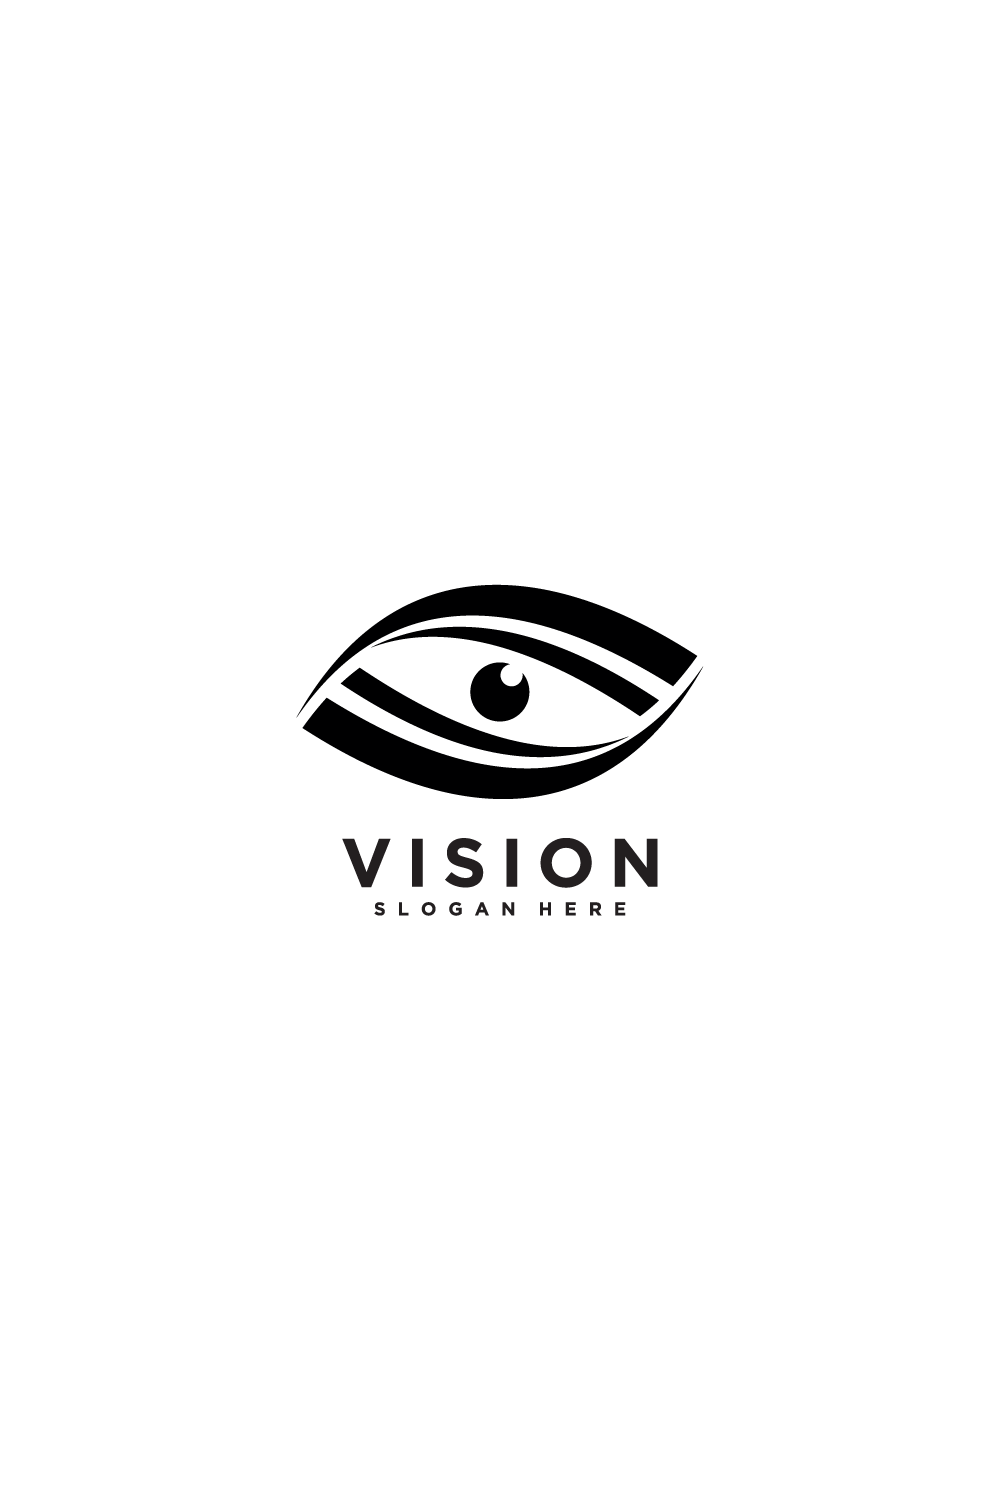 eye abstract logo vector designs pinterest preview image.